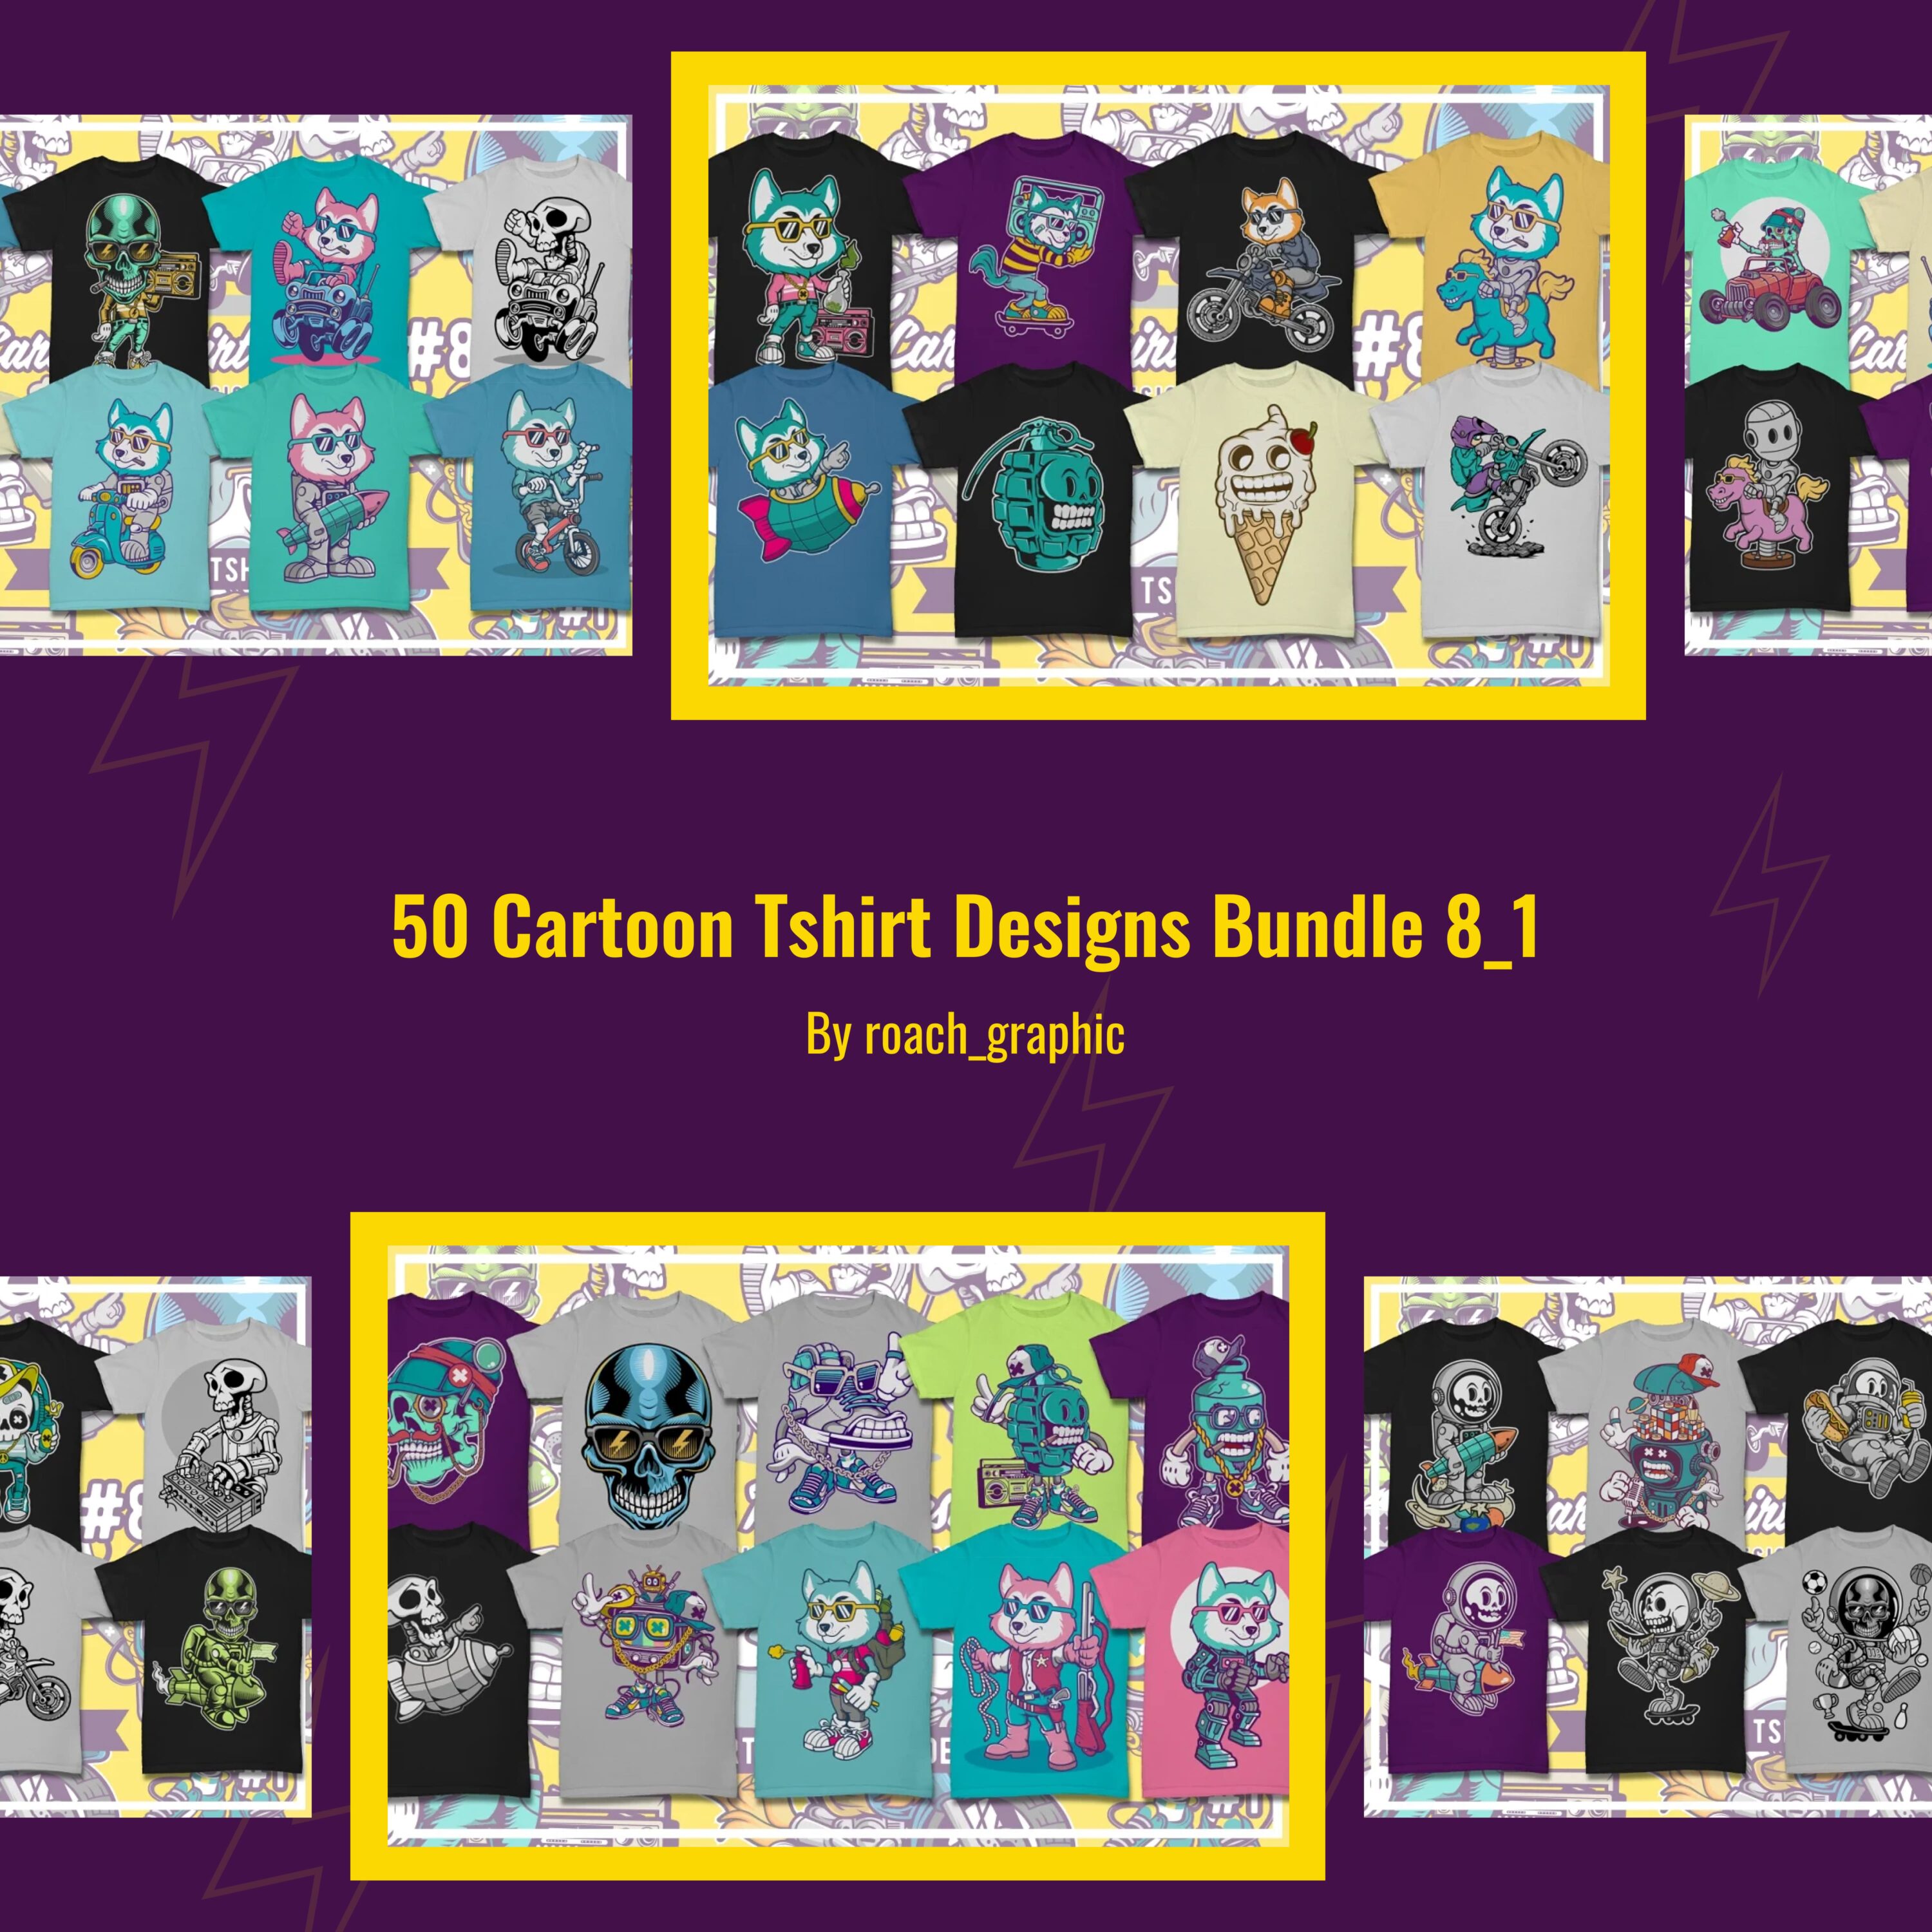 50 cartoon tshirt designs bundle 8.